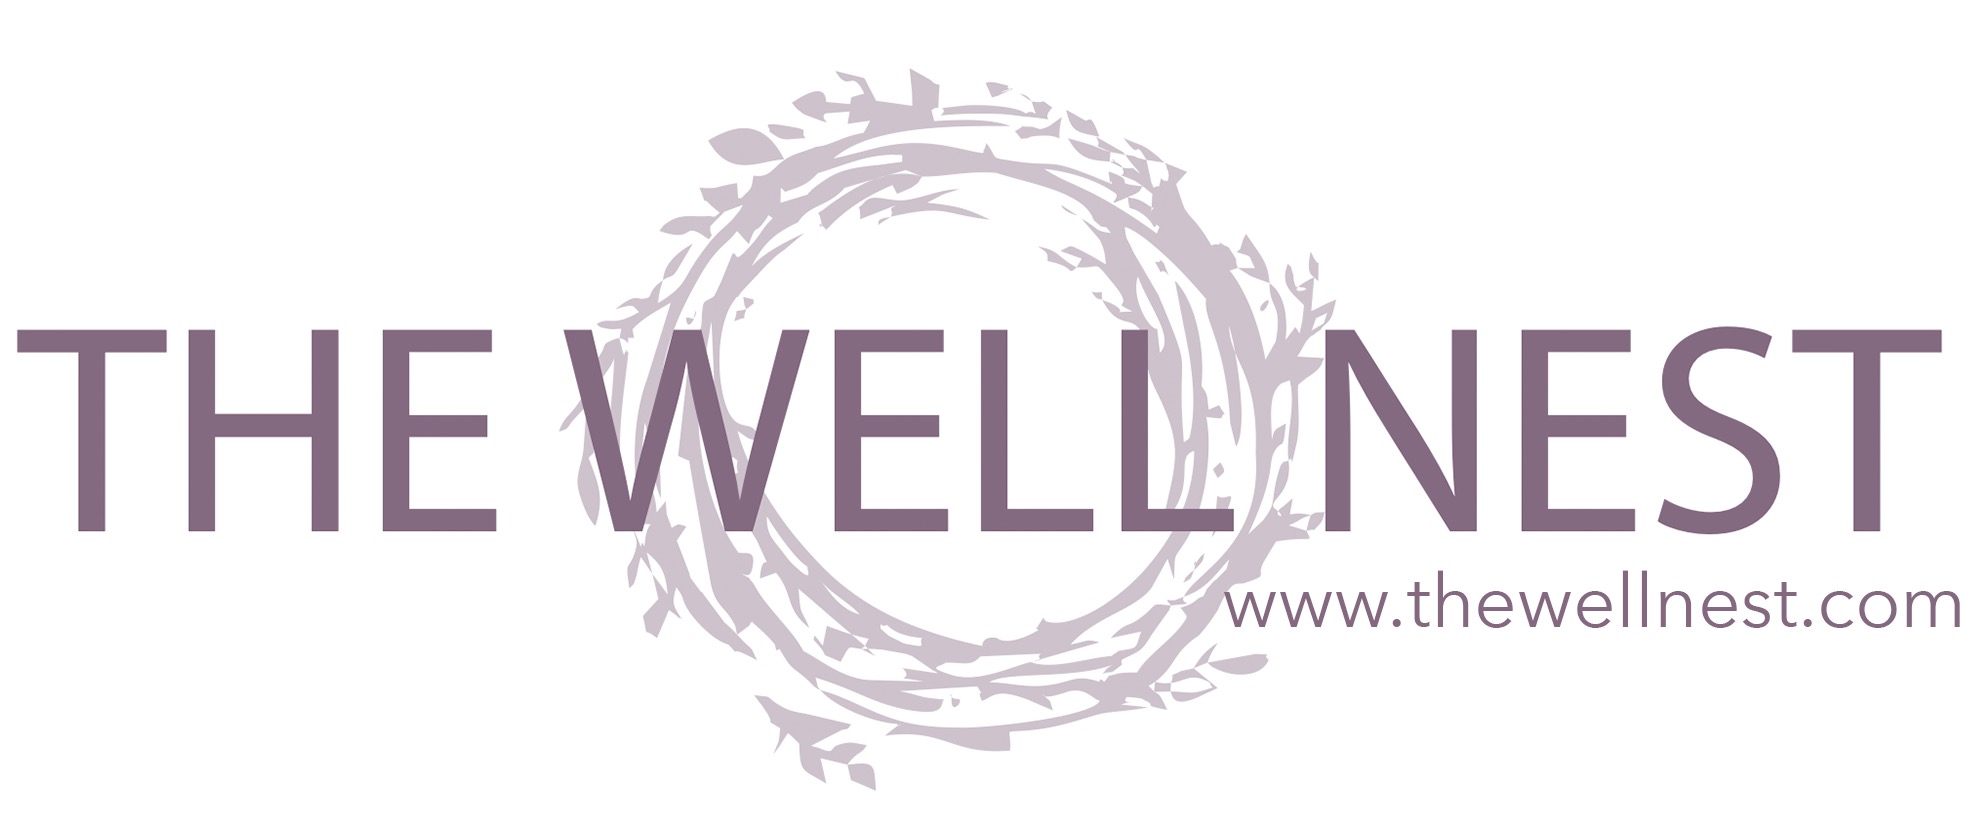 The Well Nest Logo